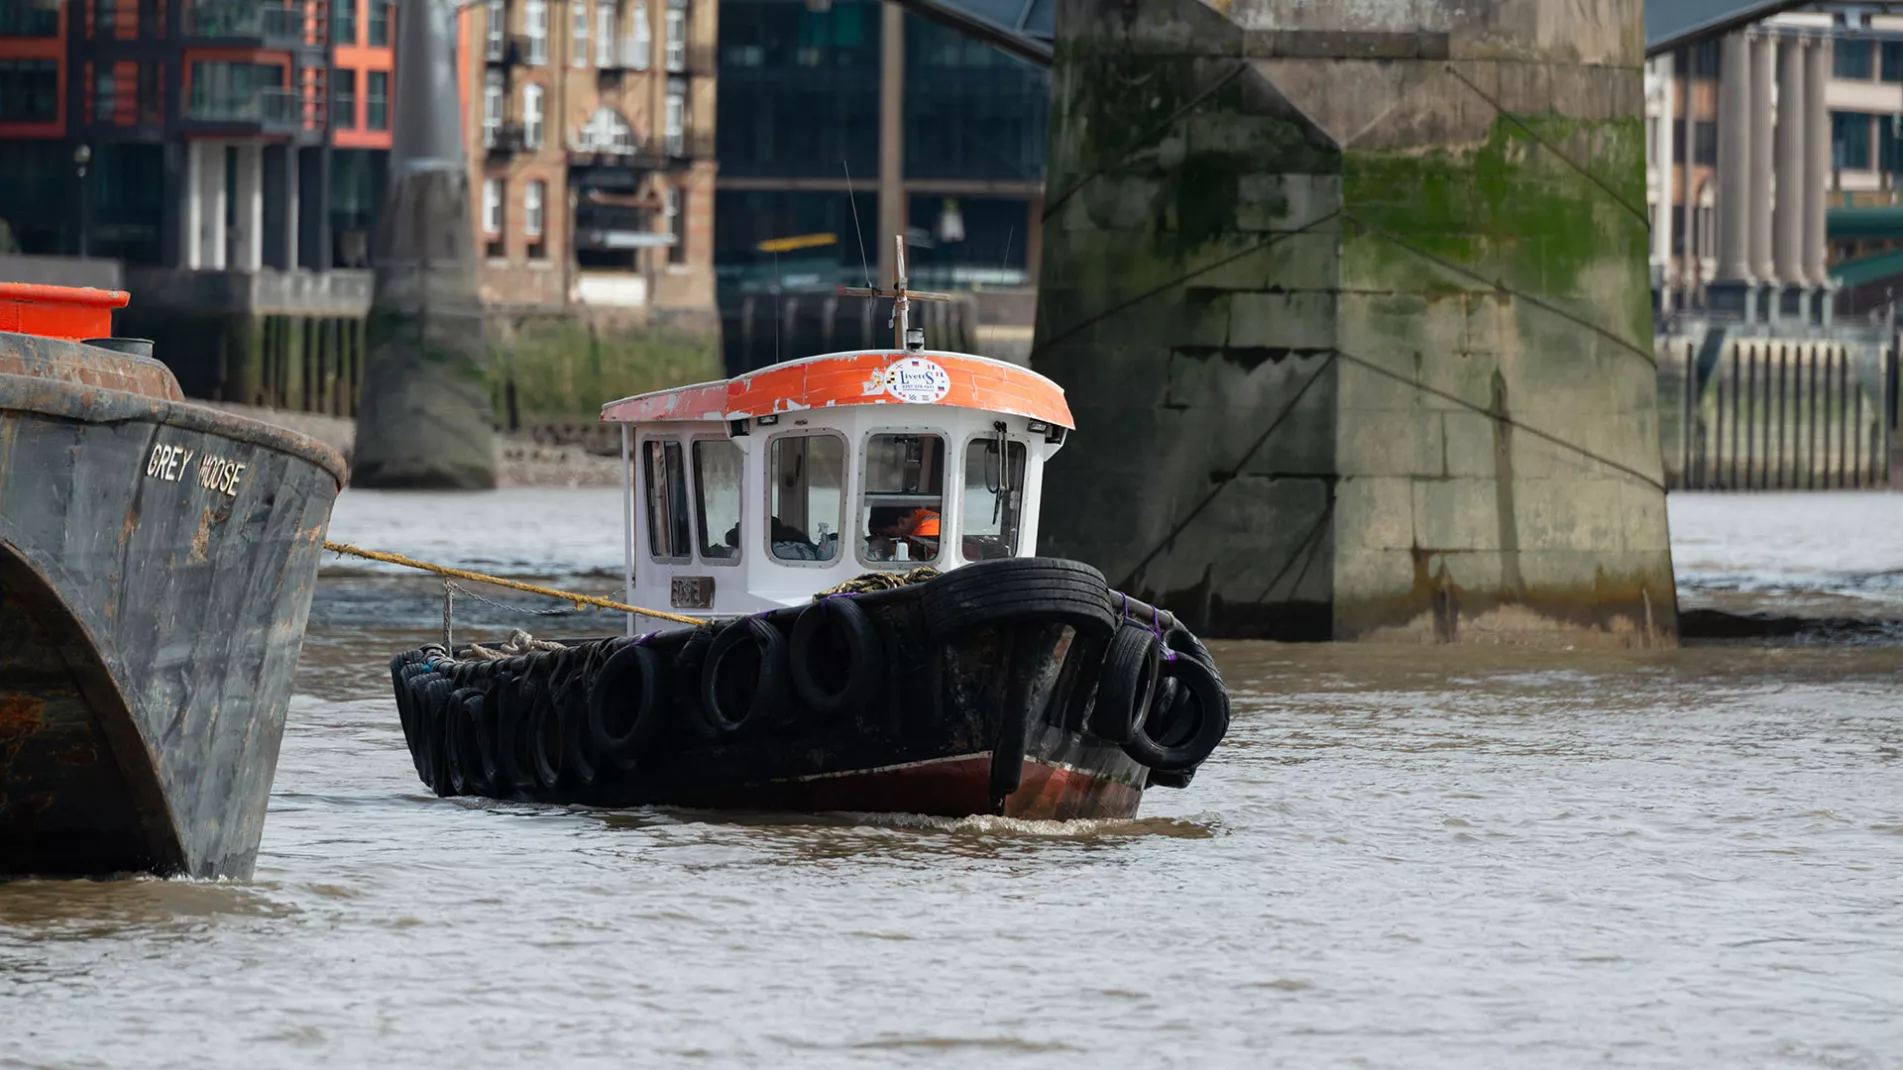 Livetts vessel near bridge in central London